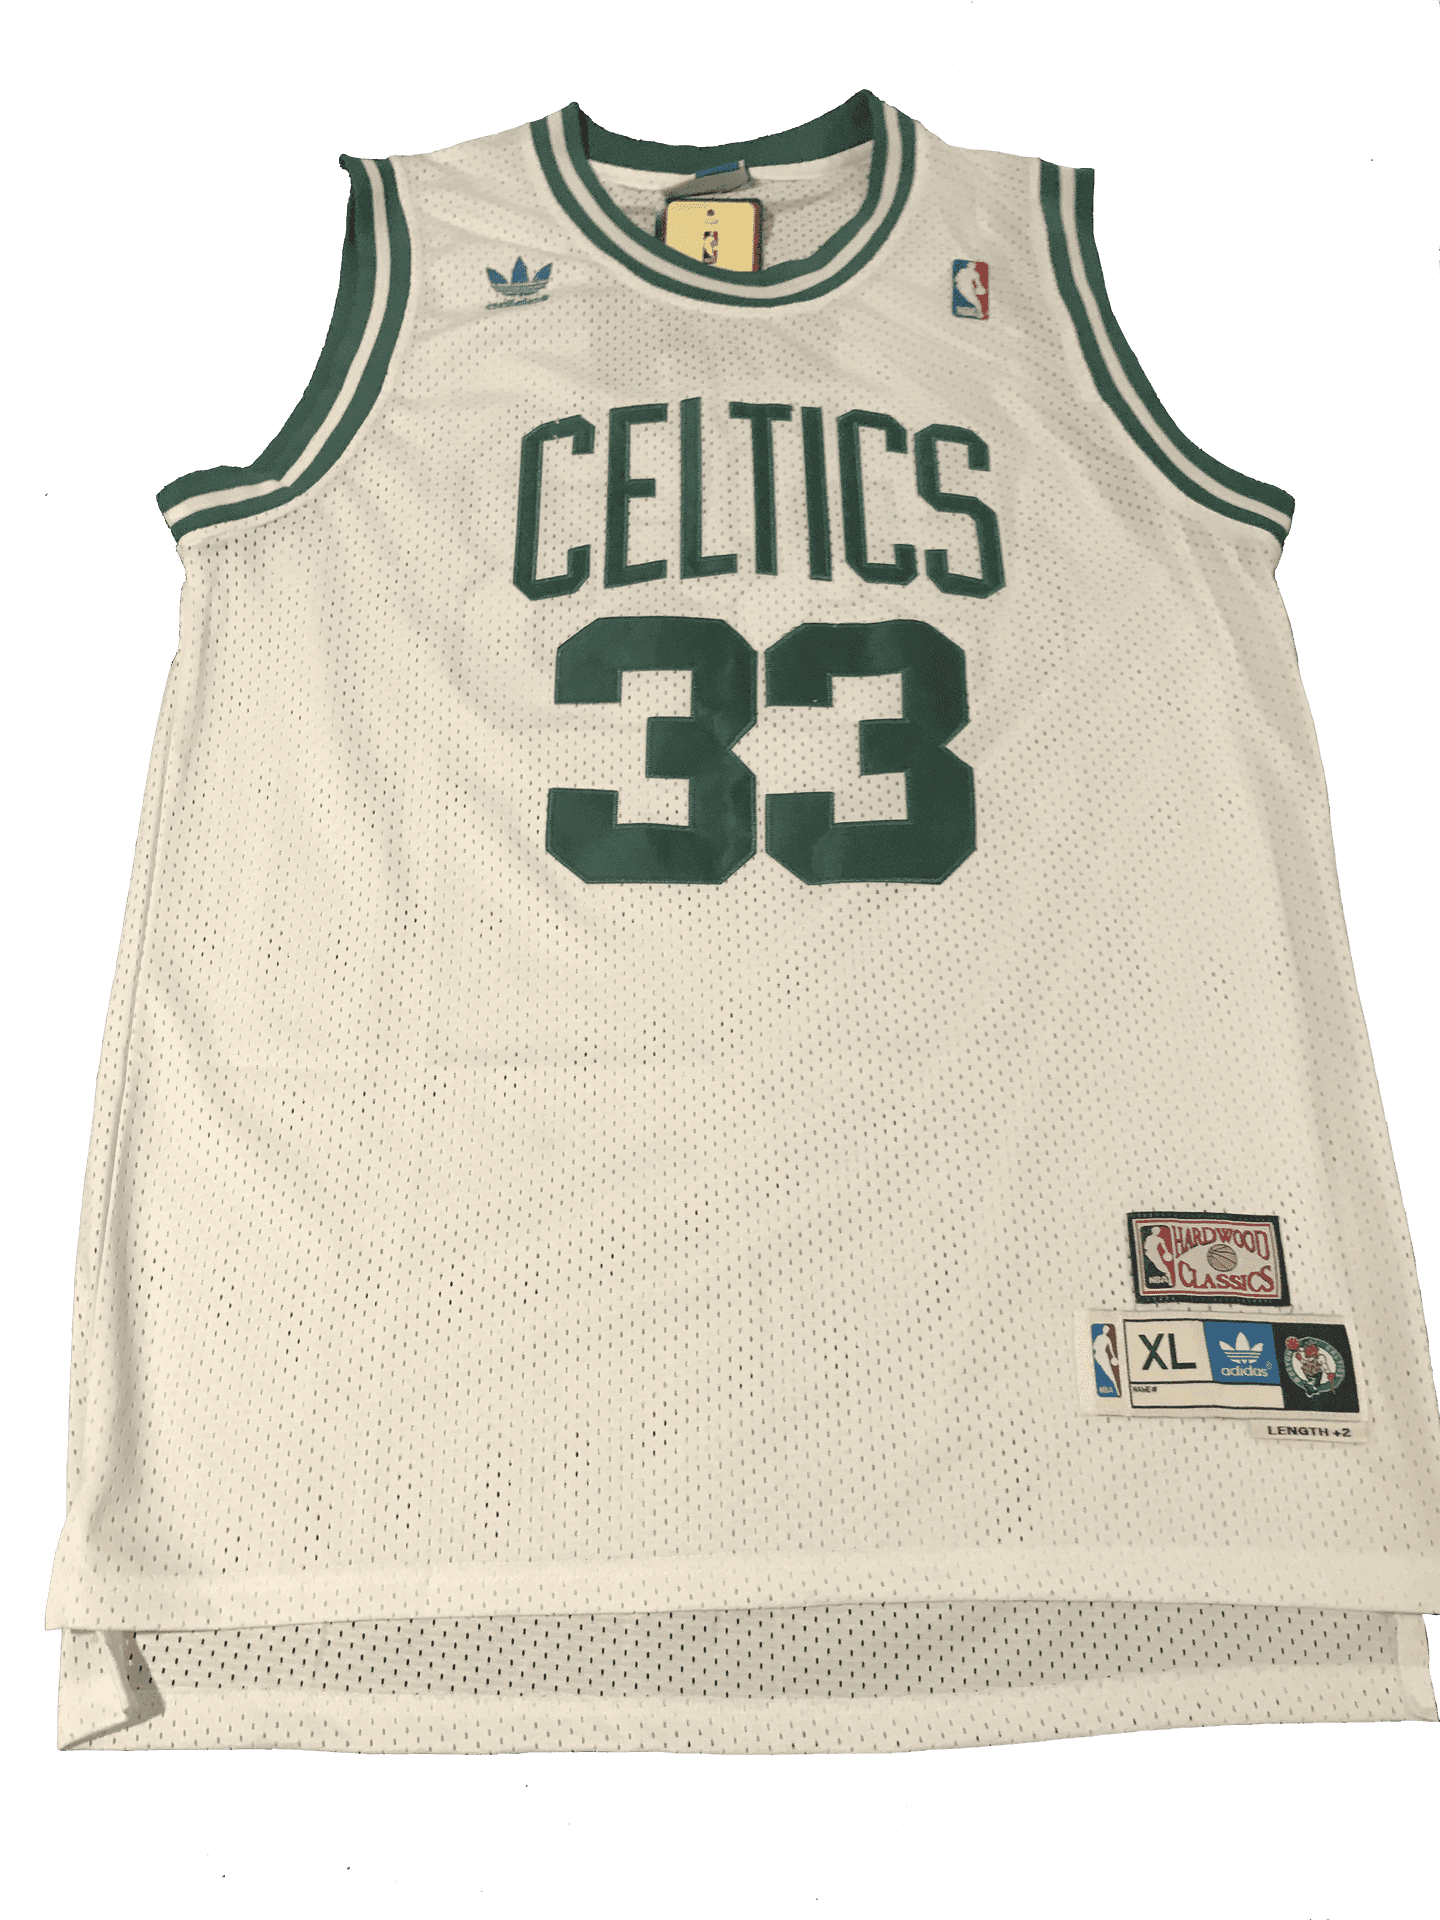 Celtics33 Basketball Jersey PNG image